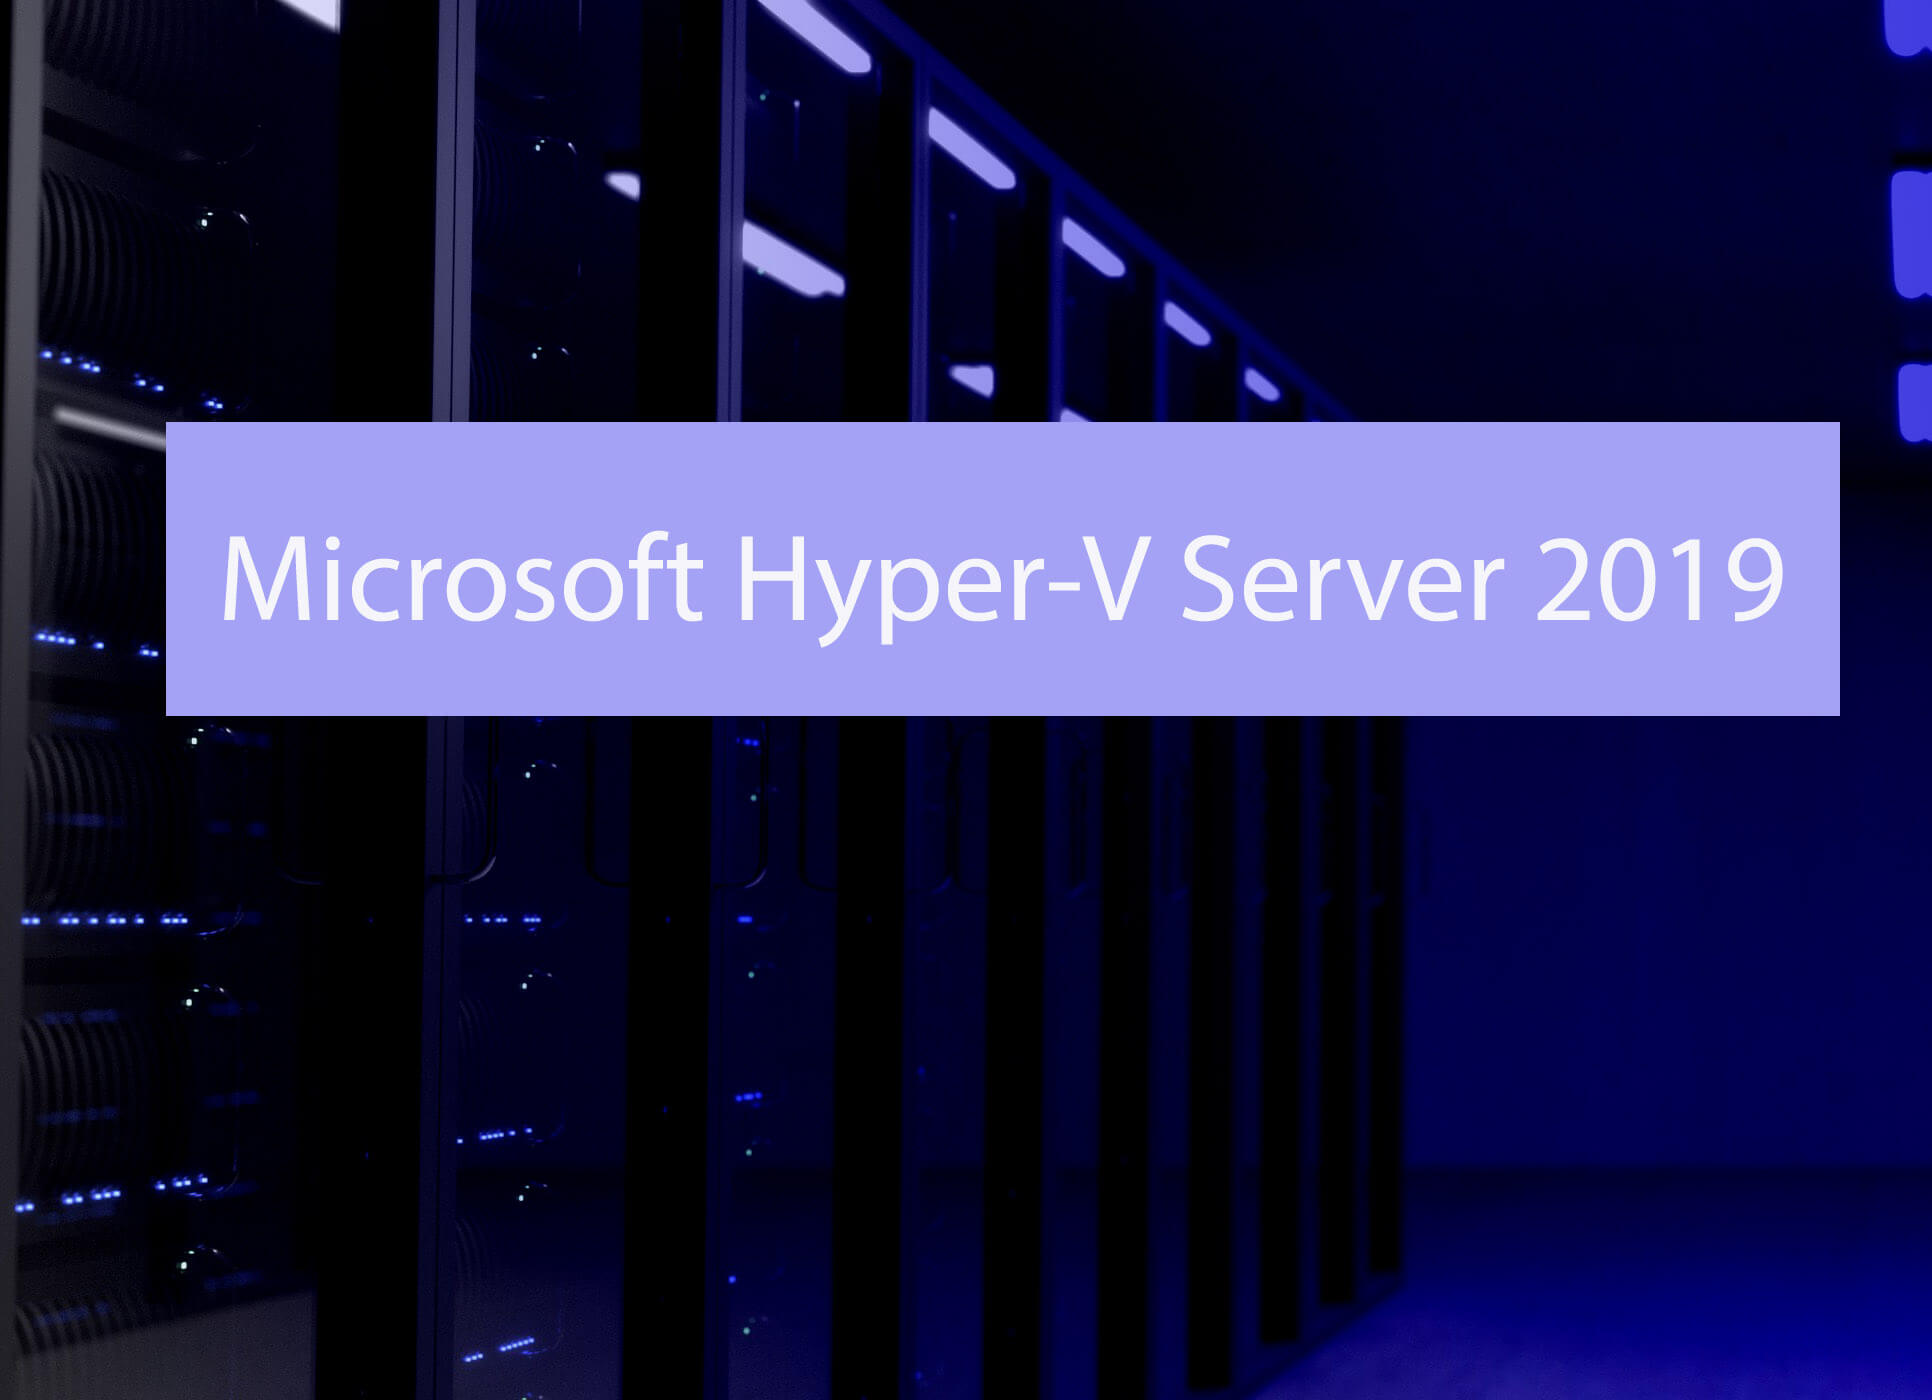 microsoft hyper-v video windows server 2019 10.0 driver download